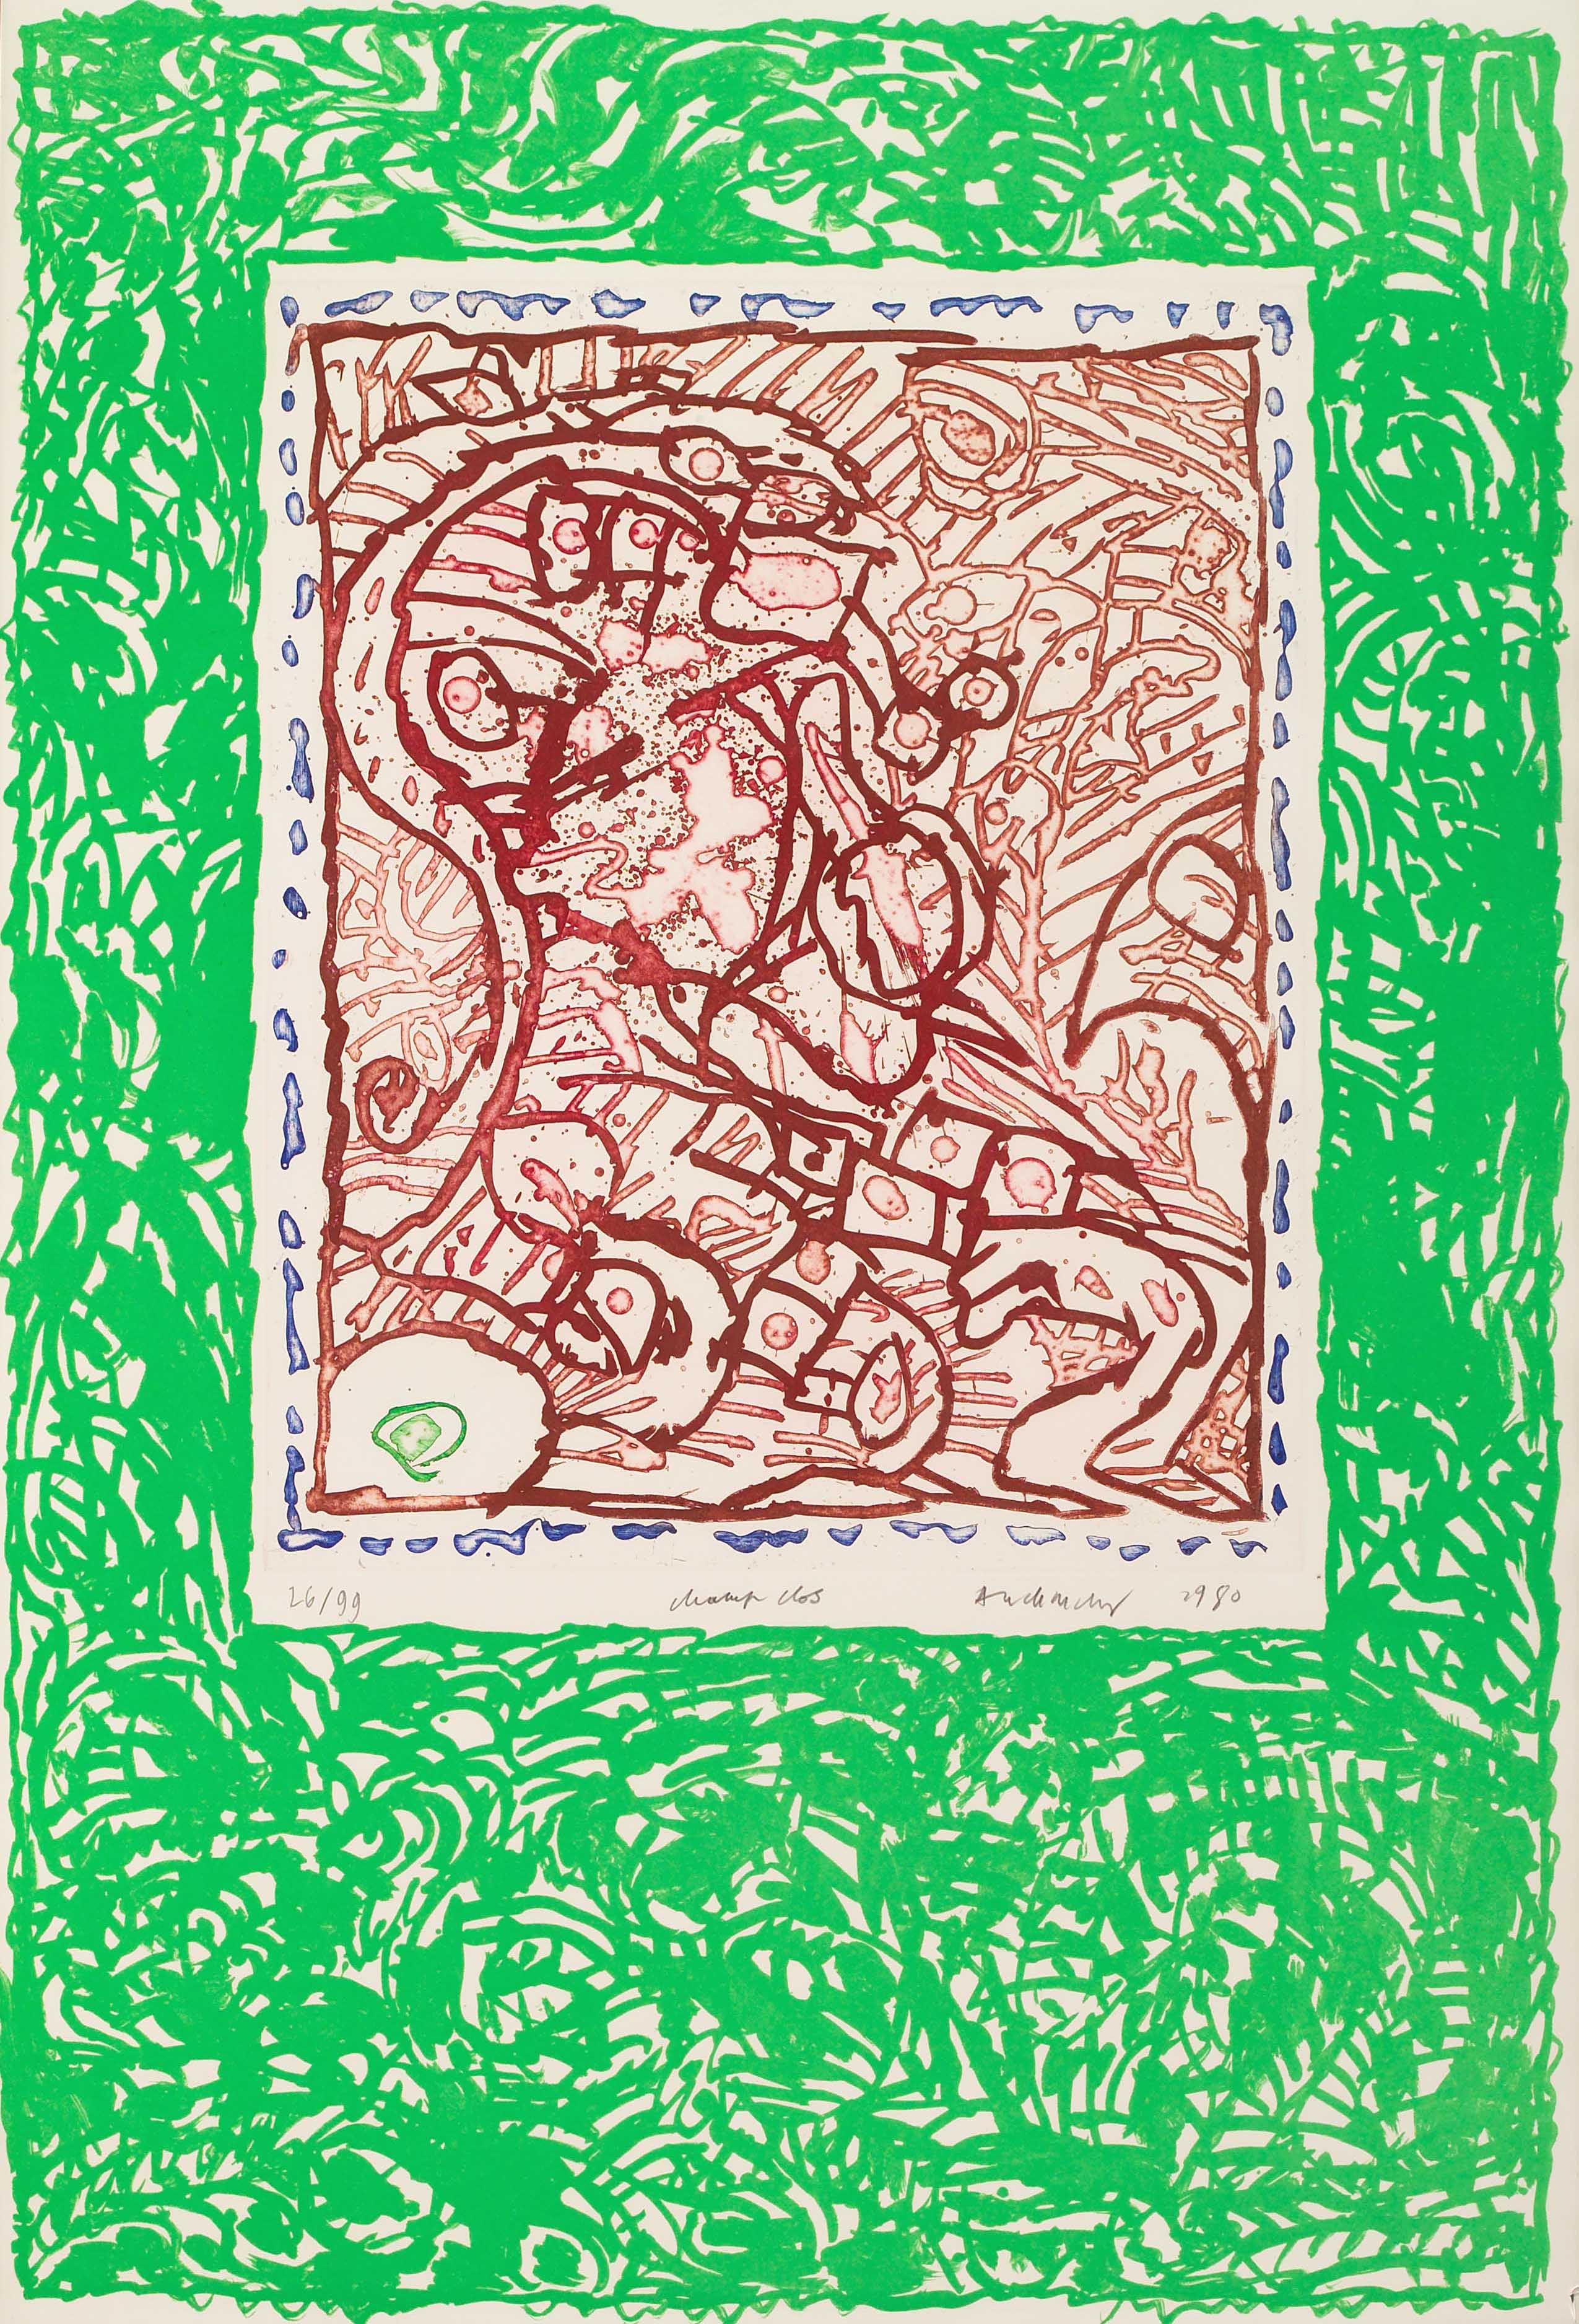 ▲Pierre Alechinsky, <Champ clos>, 판화, 136 x 57cm, 1980. 홍익대학교 박물관 소장